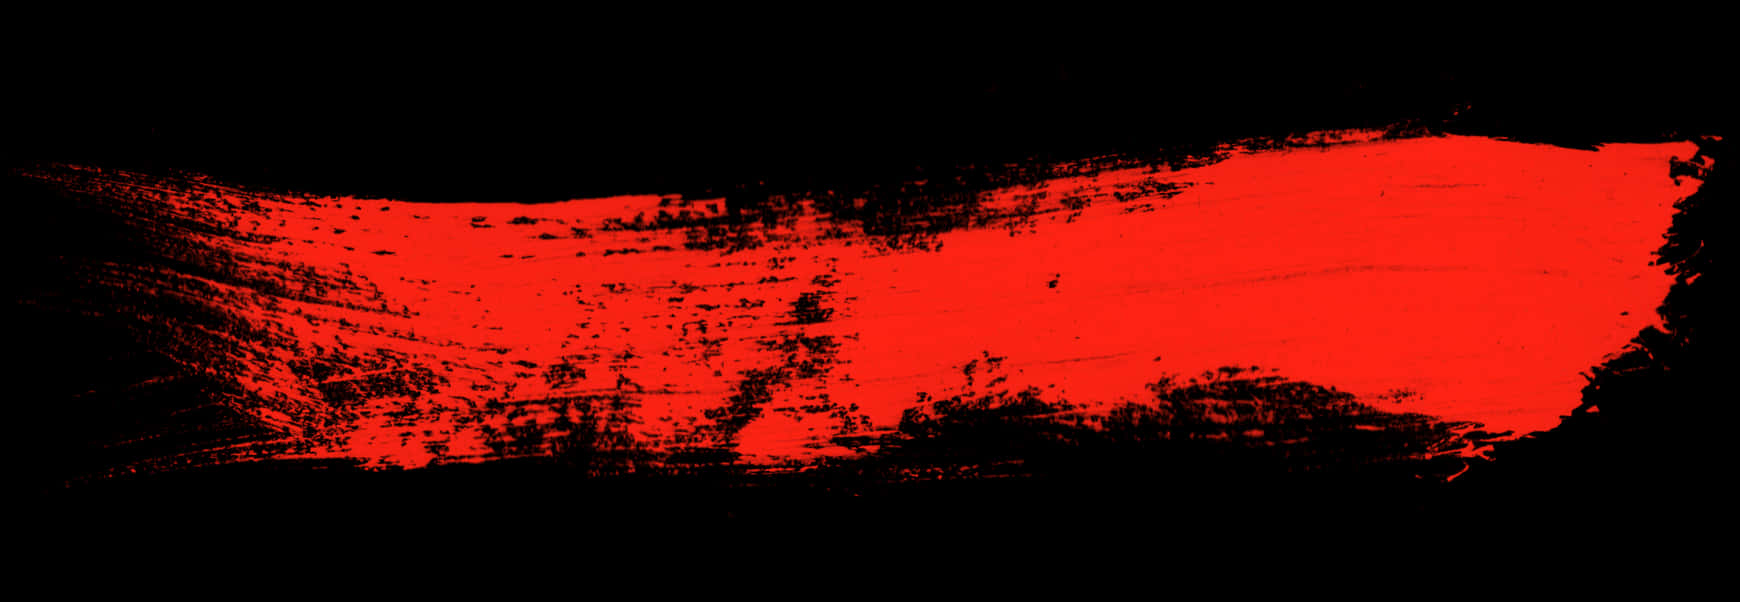 Vibrant_ Red_ Paint_ Stroke_on_ Black_ Background.jpg PNG